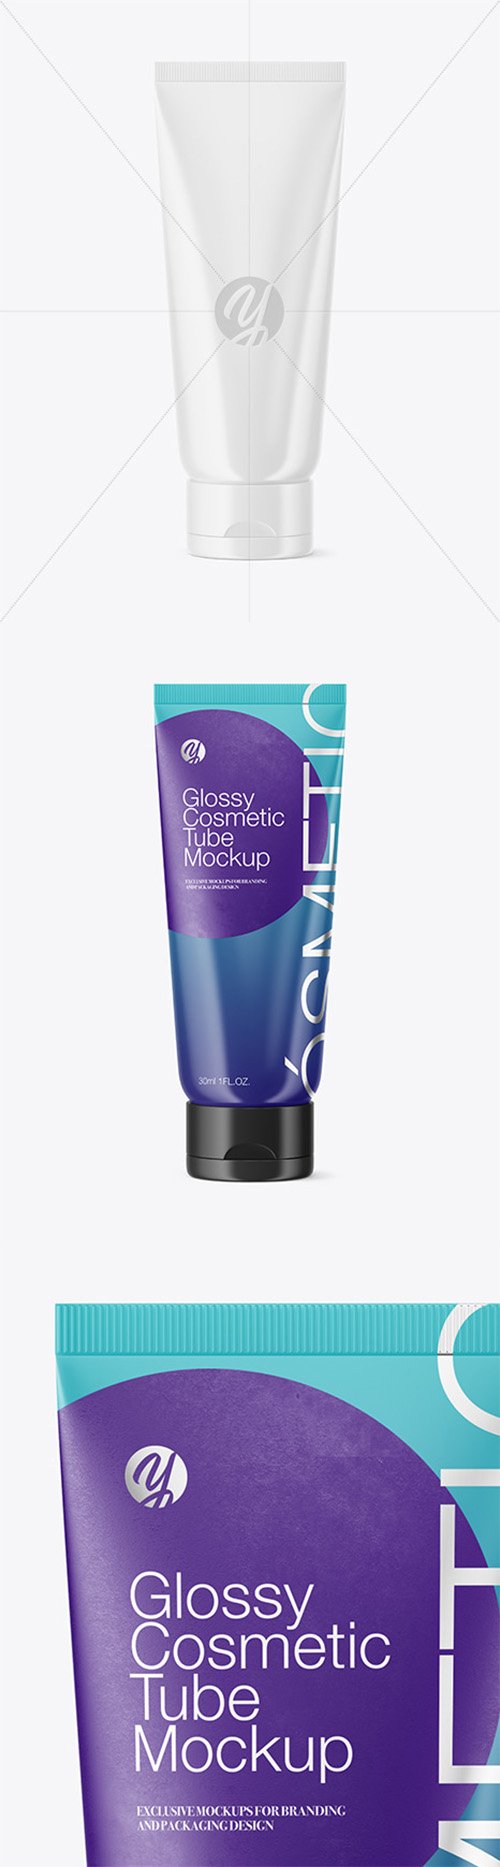 Glossy Cosmetic Tube Mockup 64849